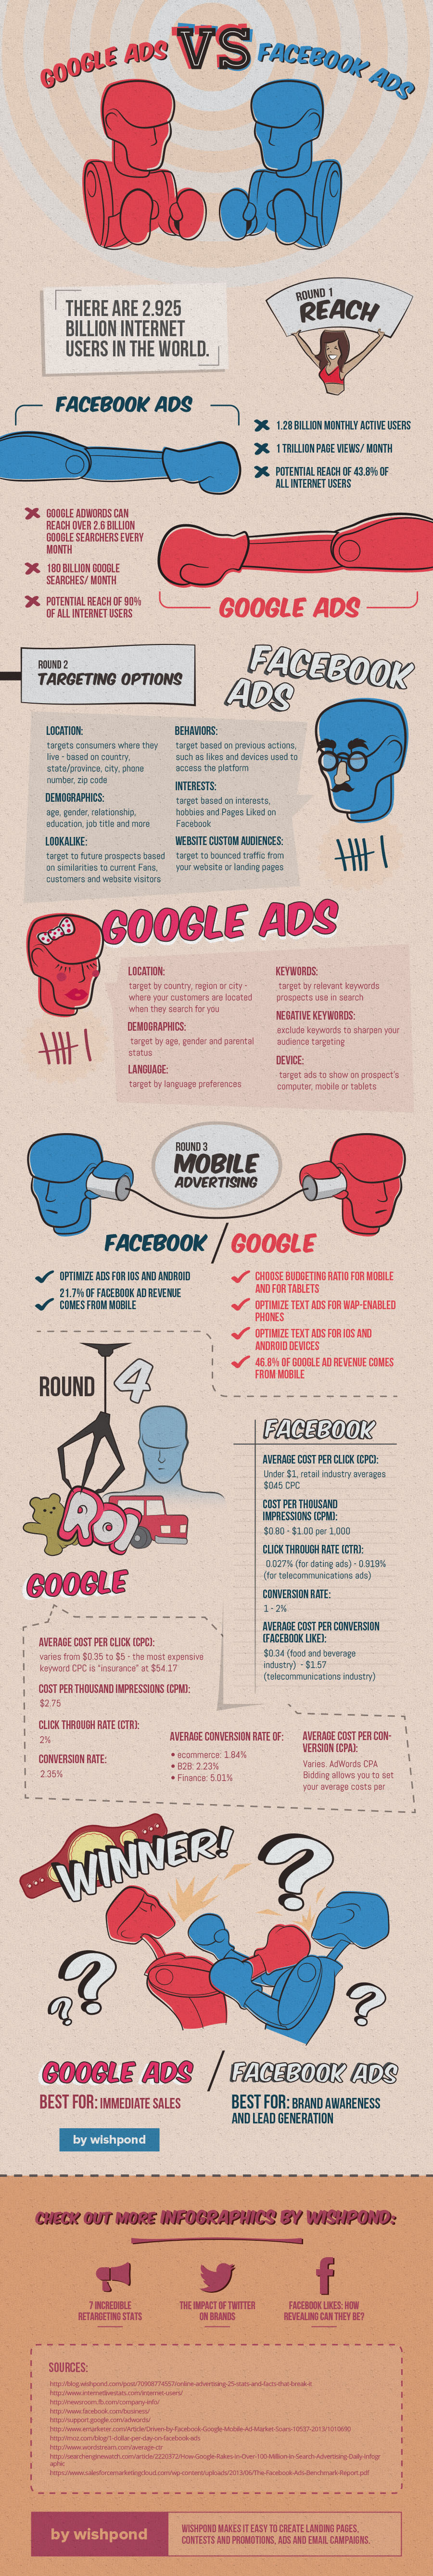 Facebook Ads vs Google Adwords